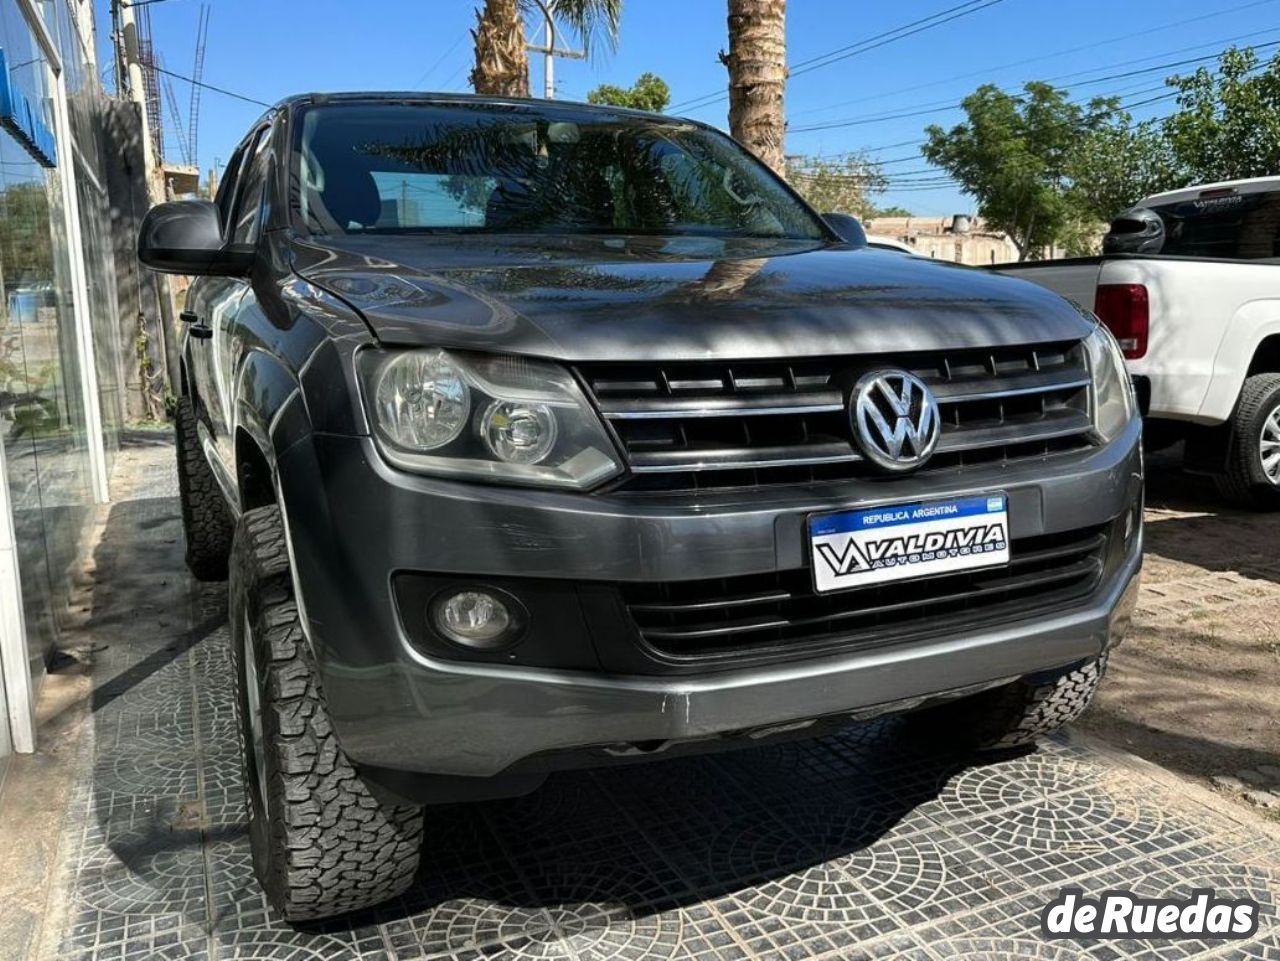 Volkswagen Amarok Usada en San Juan, deRuedas